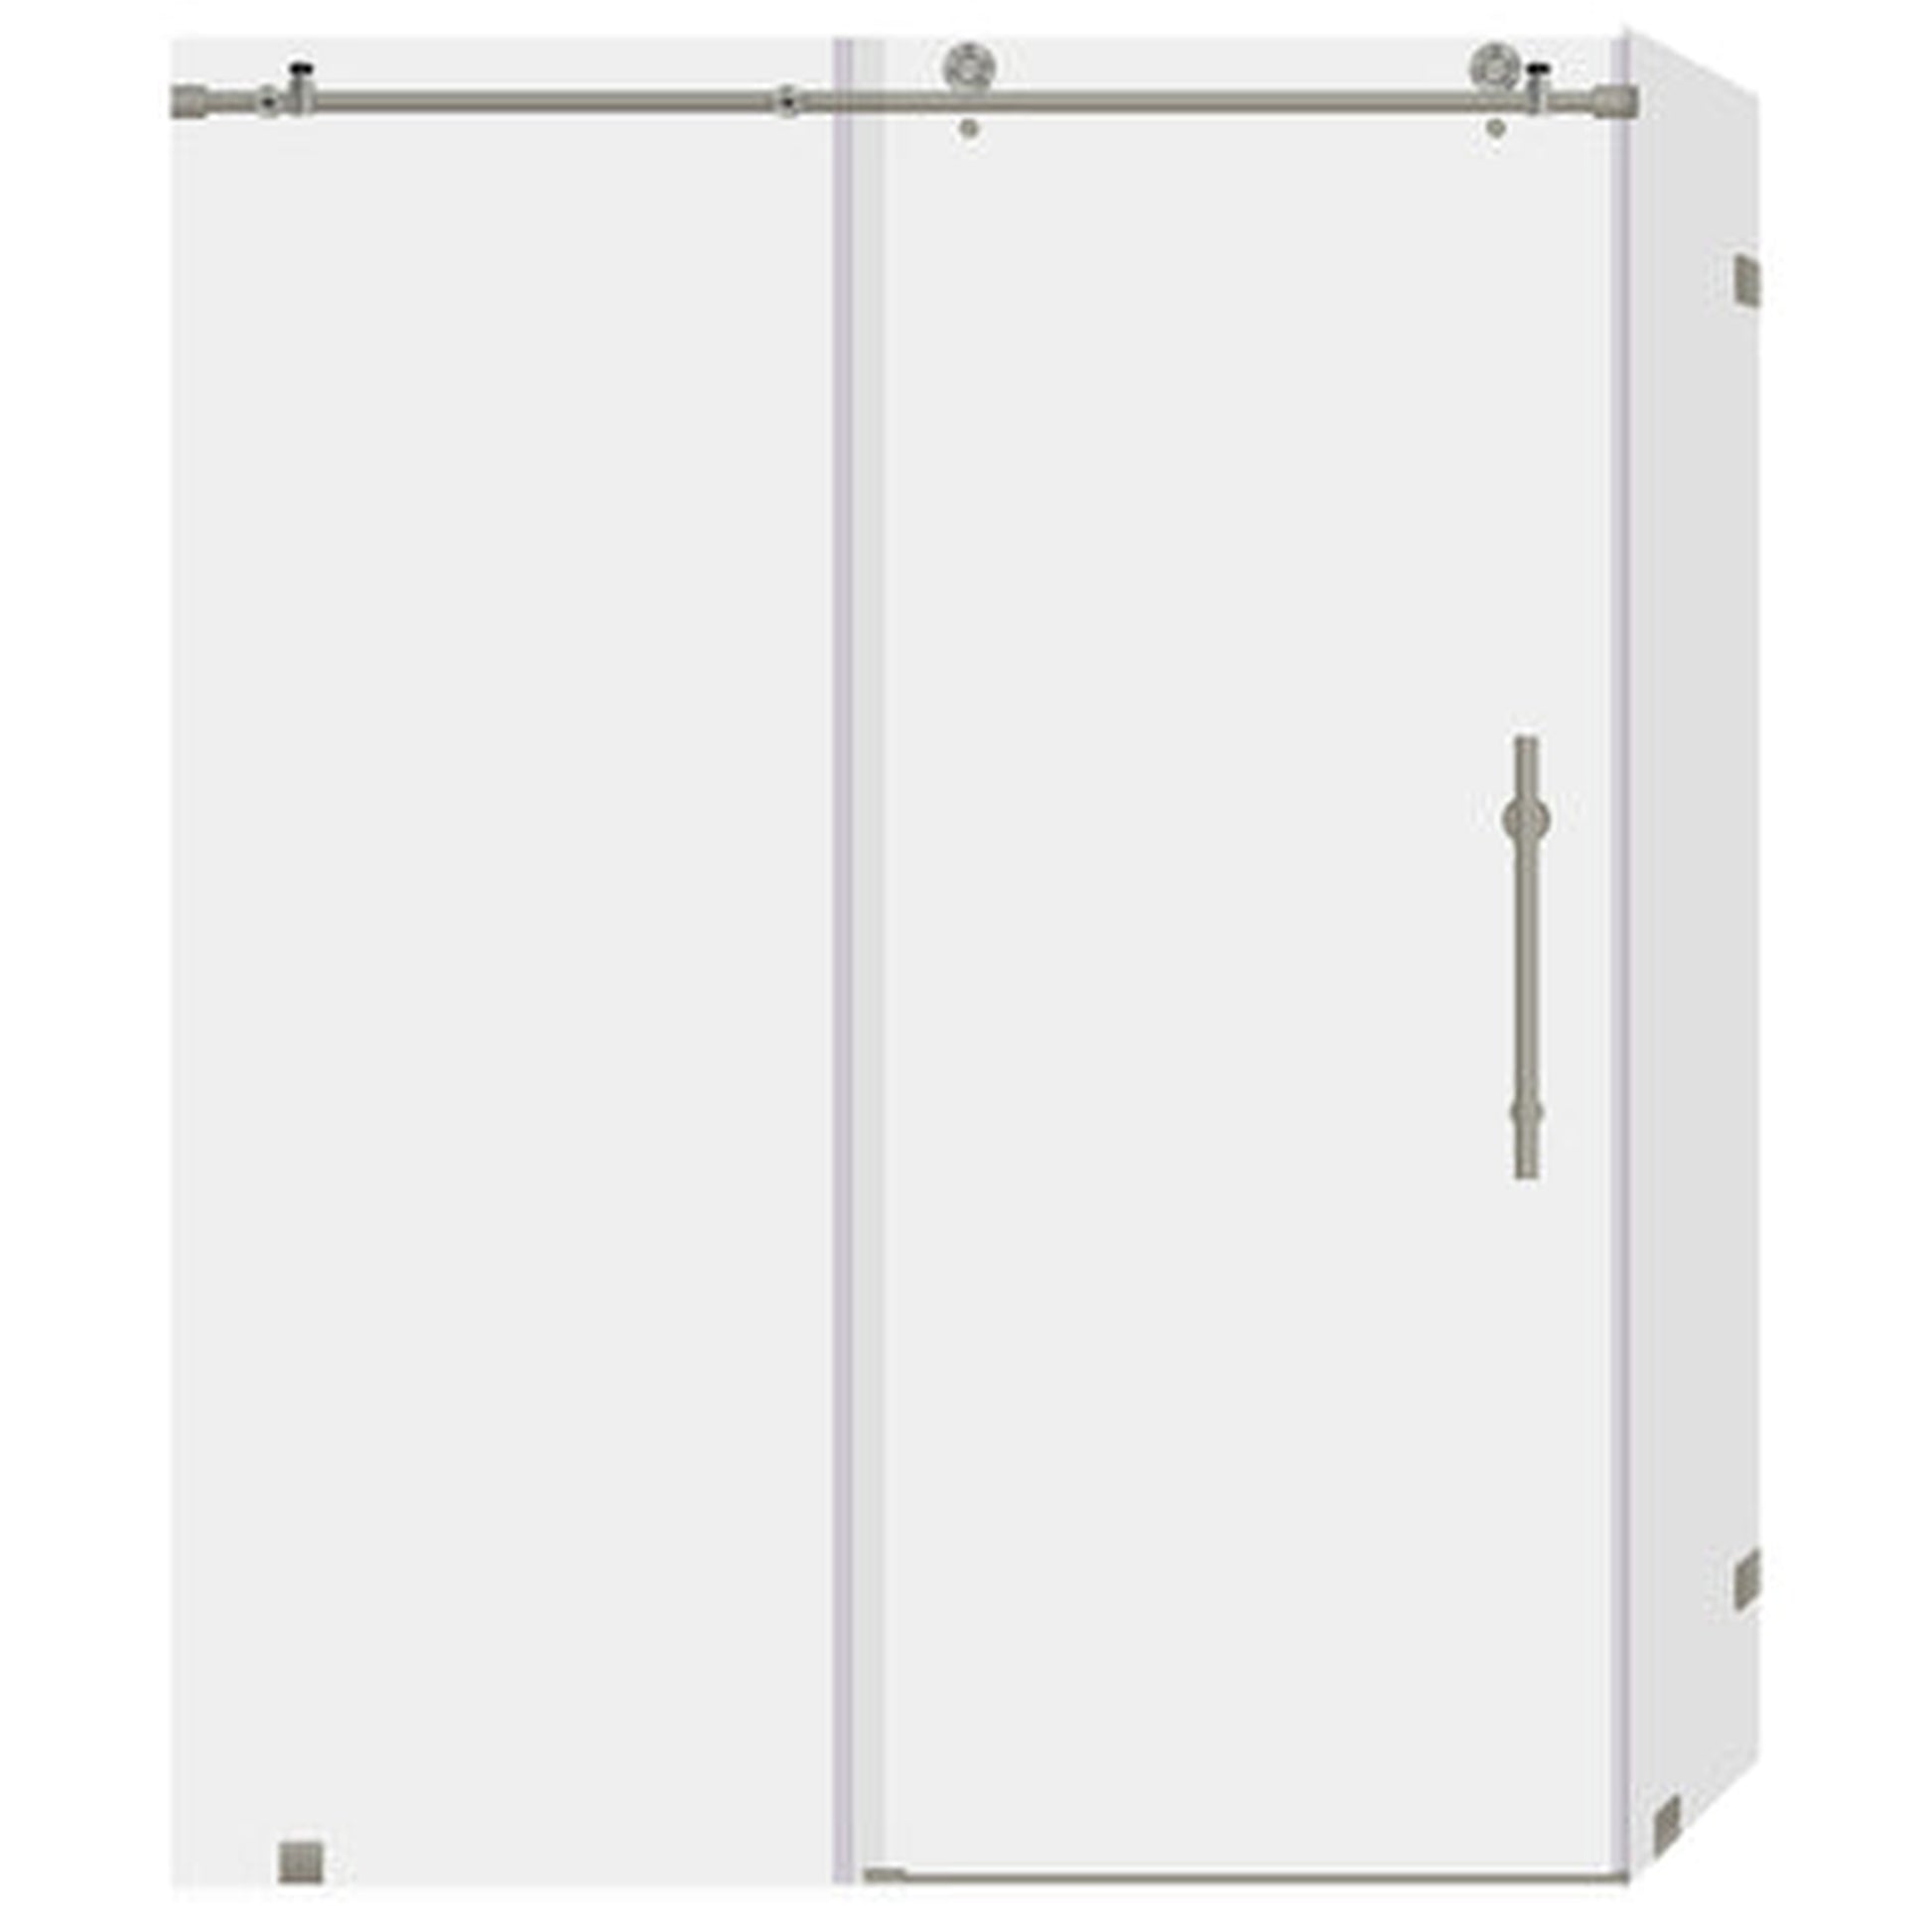 LessCare Ultra-C 56-60" x 76" x 34 1/2" Brushed Nickel Sliding Shower Enclosure